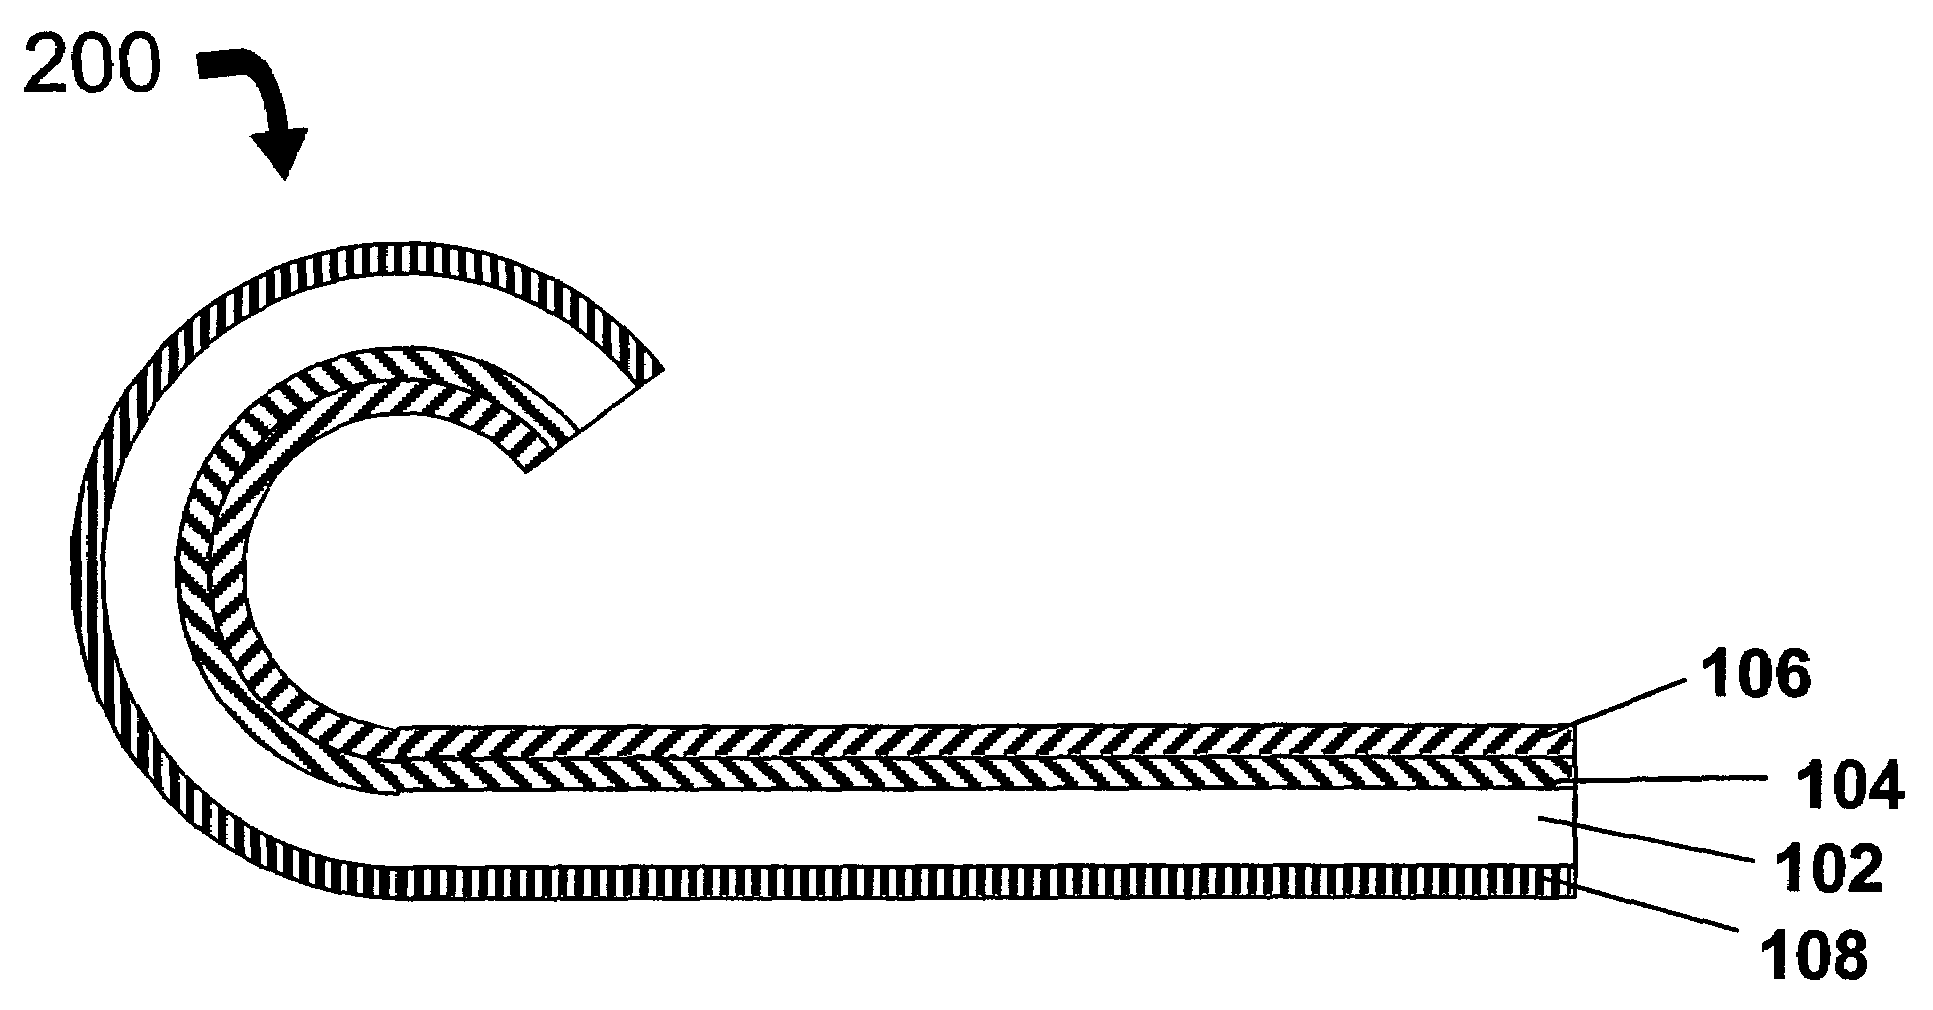 Production of versatile channel letter coil